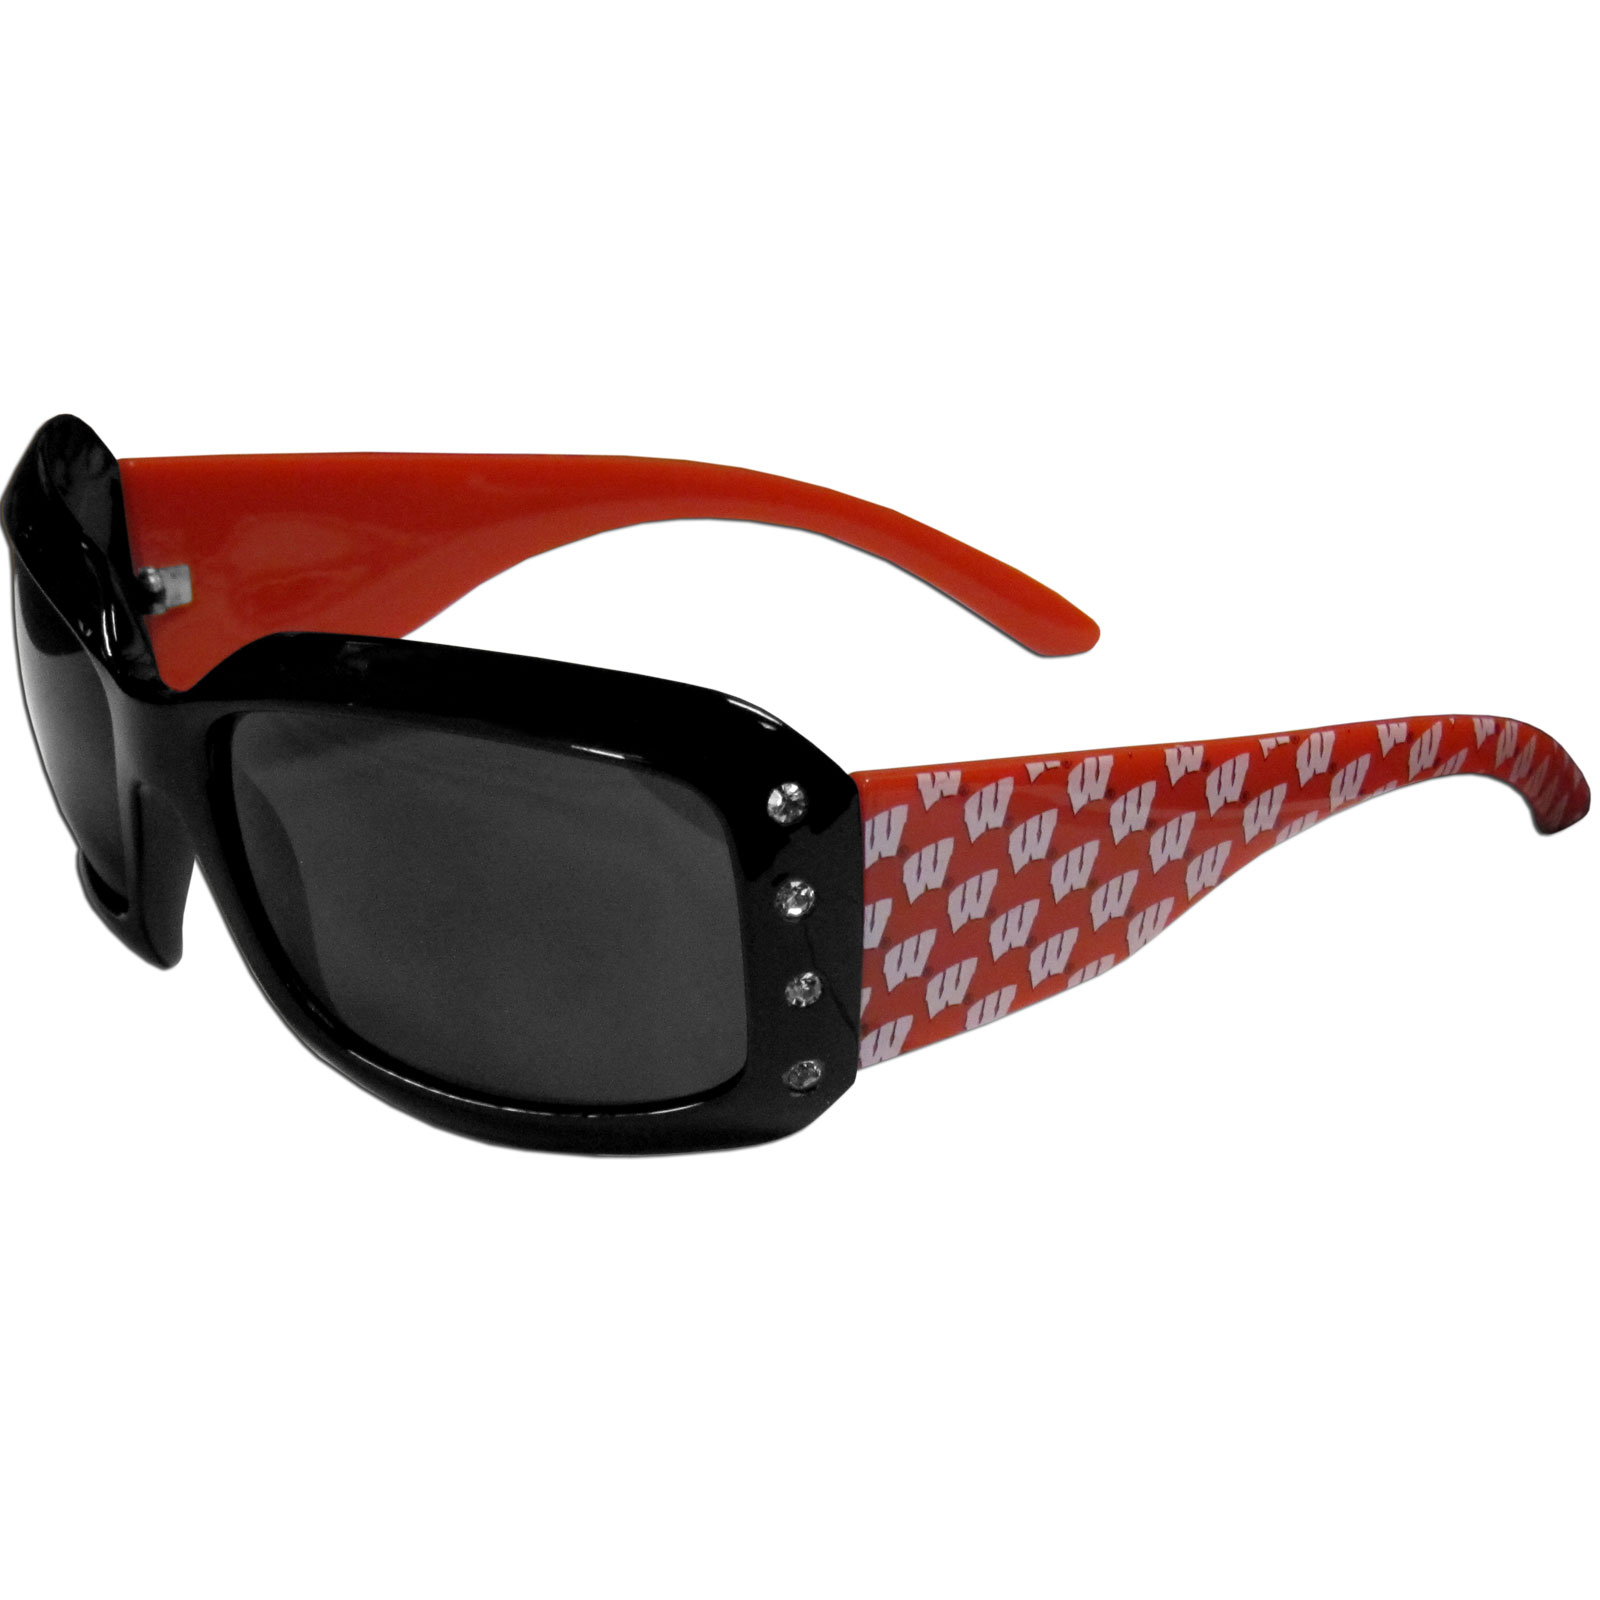 Wisconsin Designer Sunglasses with Rhinestones